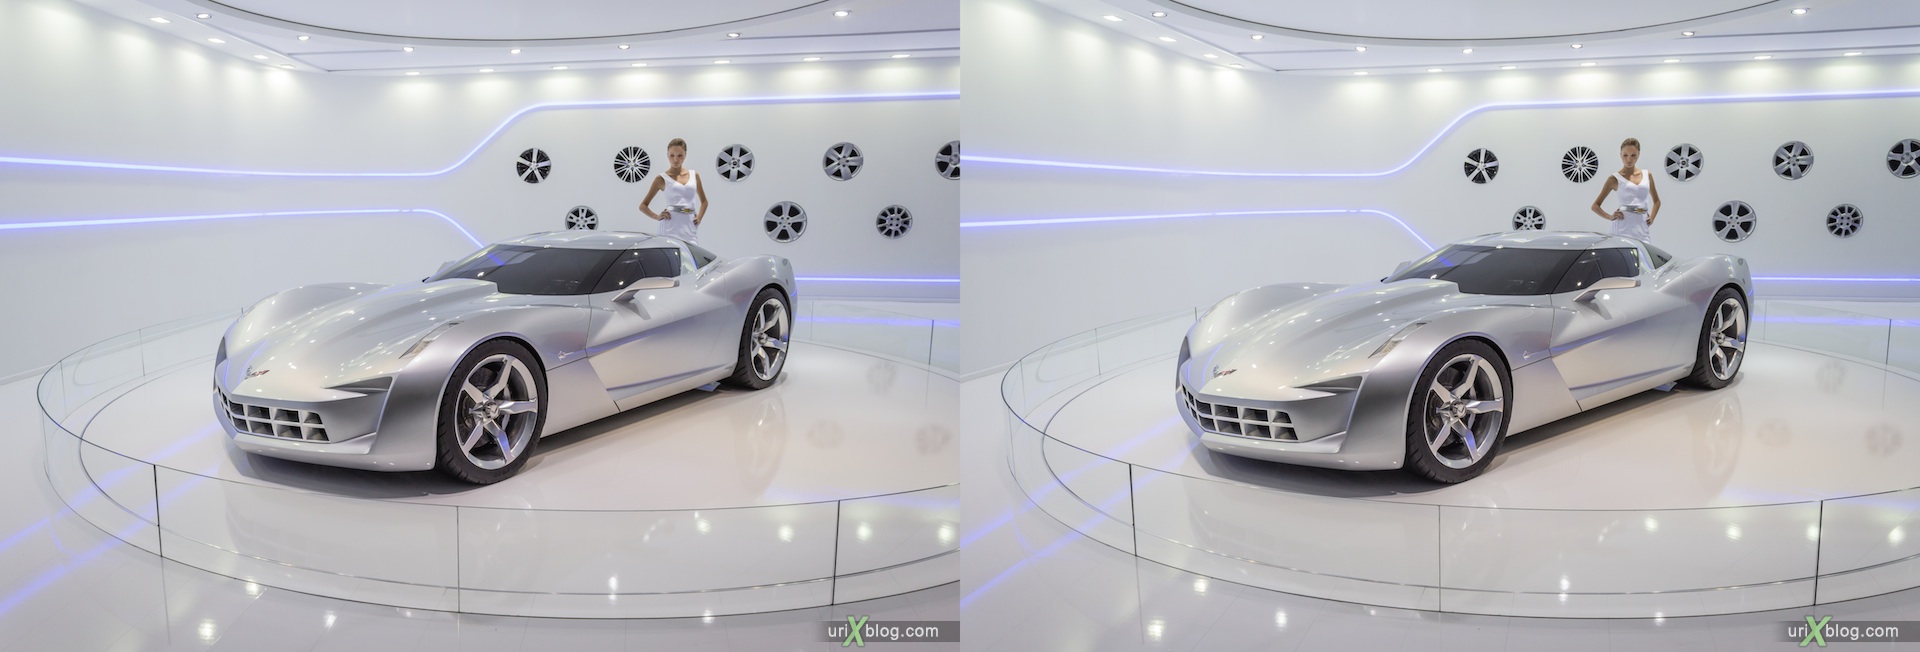 2012, Corvette Stingray, girl, model, Moscow International Automobile Salon, auto show, 3D, stereo pair, cross-eyed, crossview